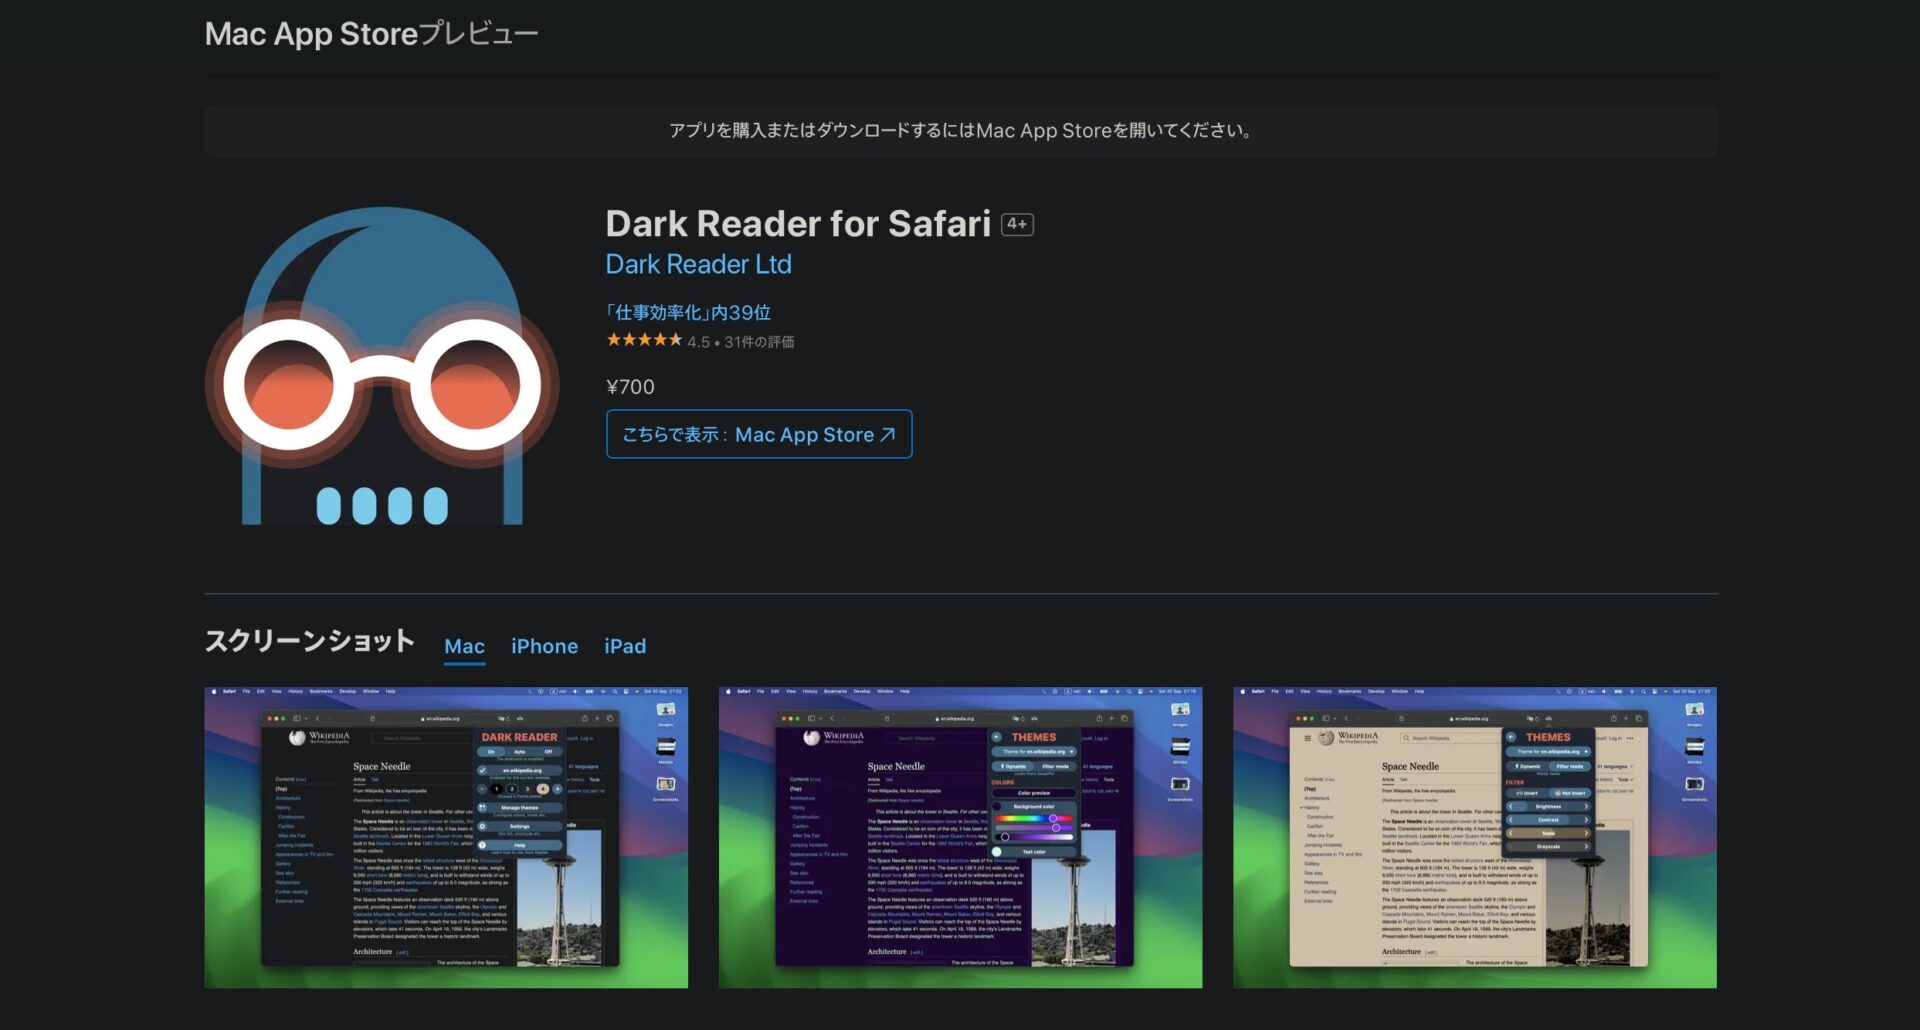 Dark Reader for Safariのダウンロード画面。